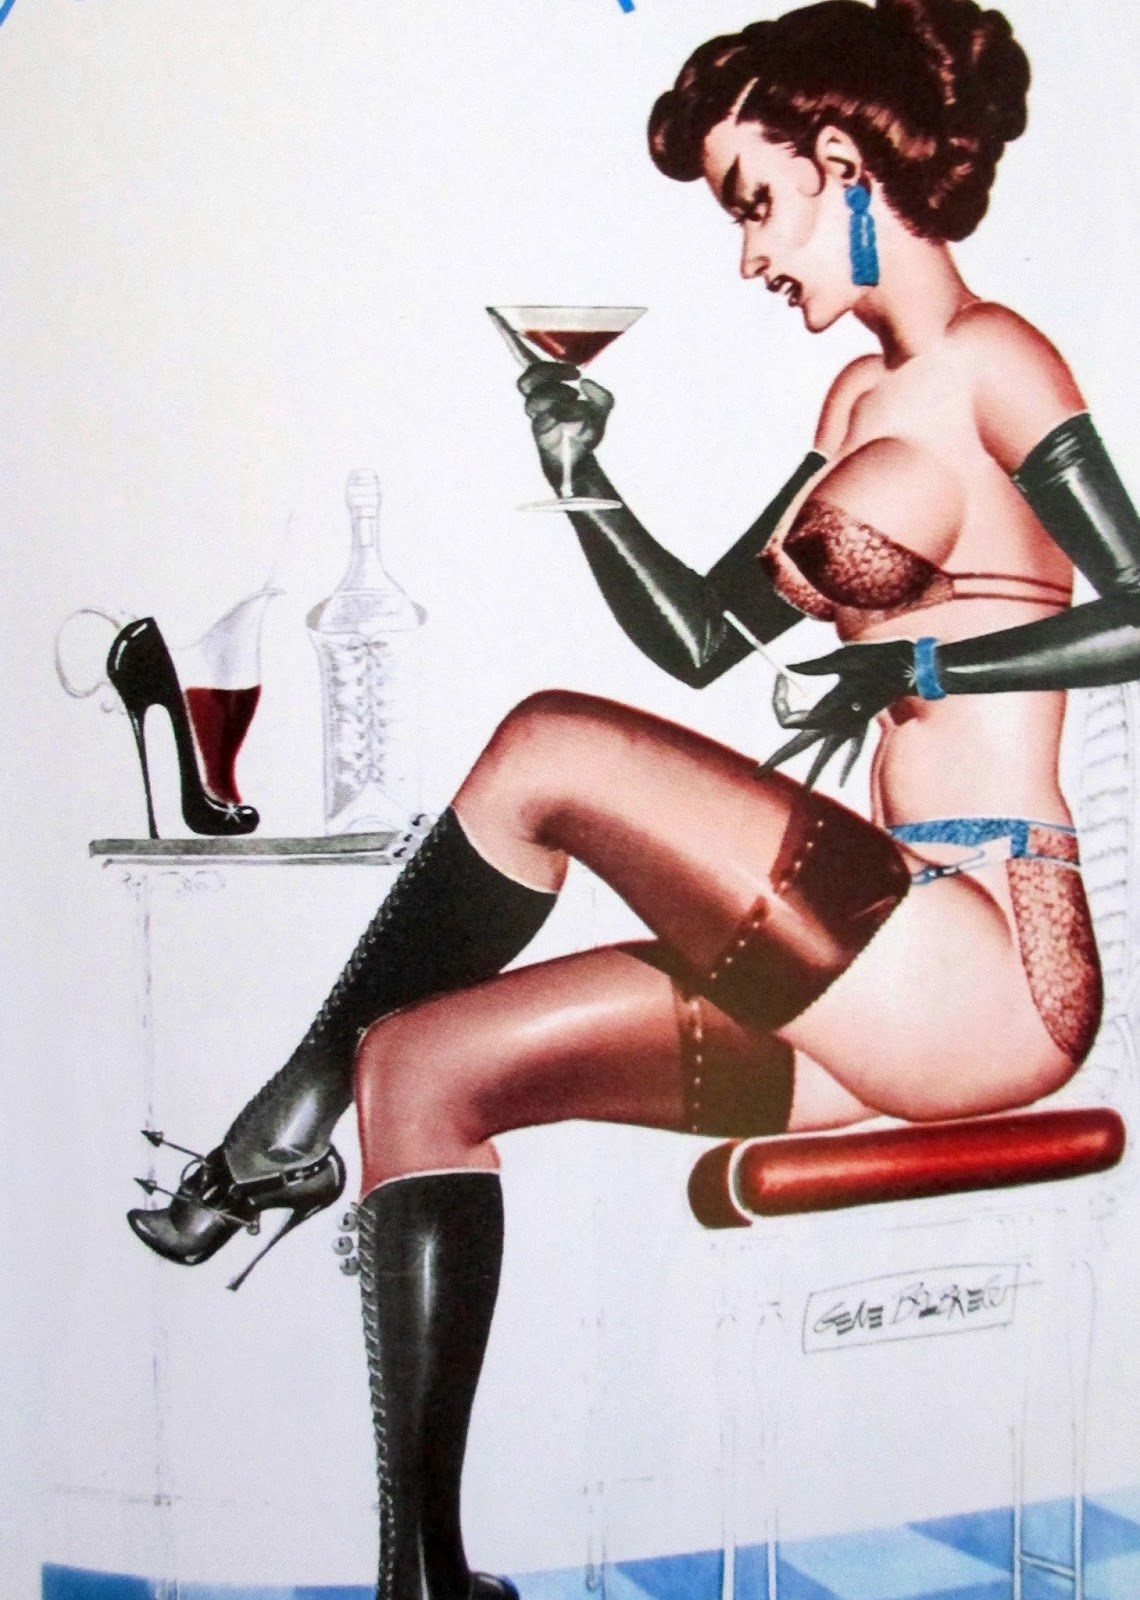 German Bondage Sex Comics - Nine of the most iconic retro BDSM illustrators | Dazed